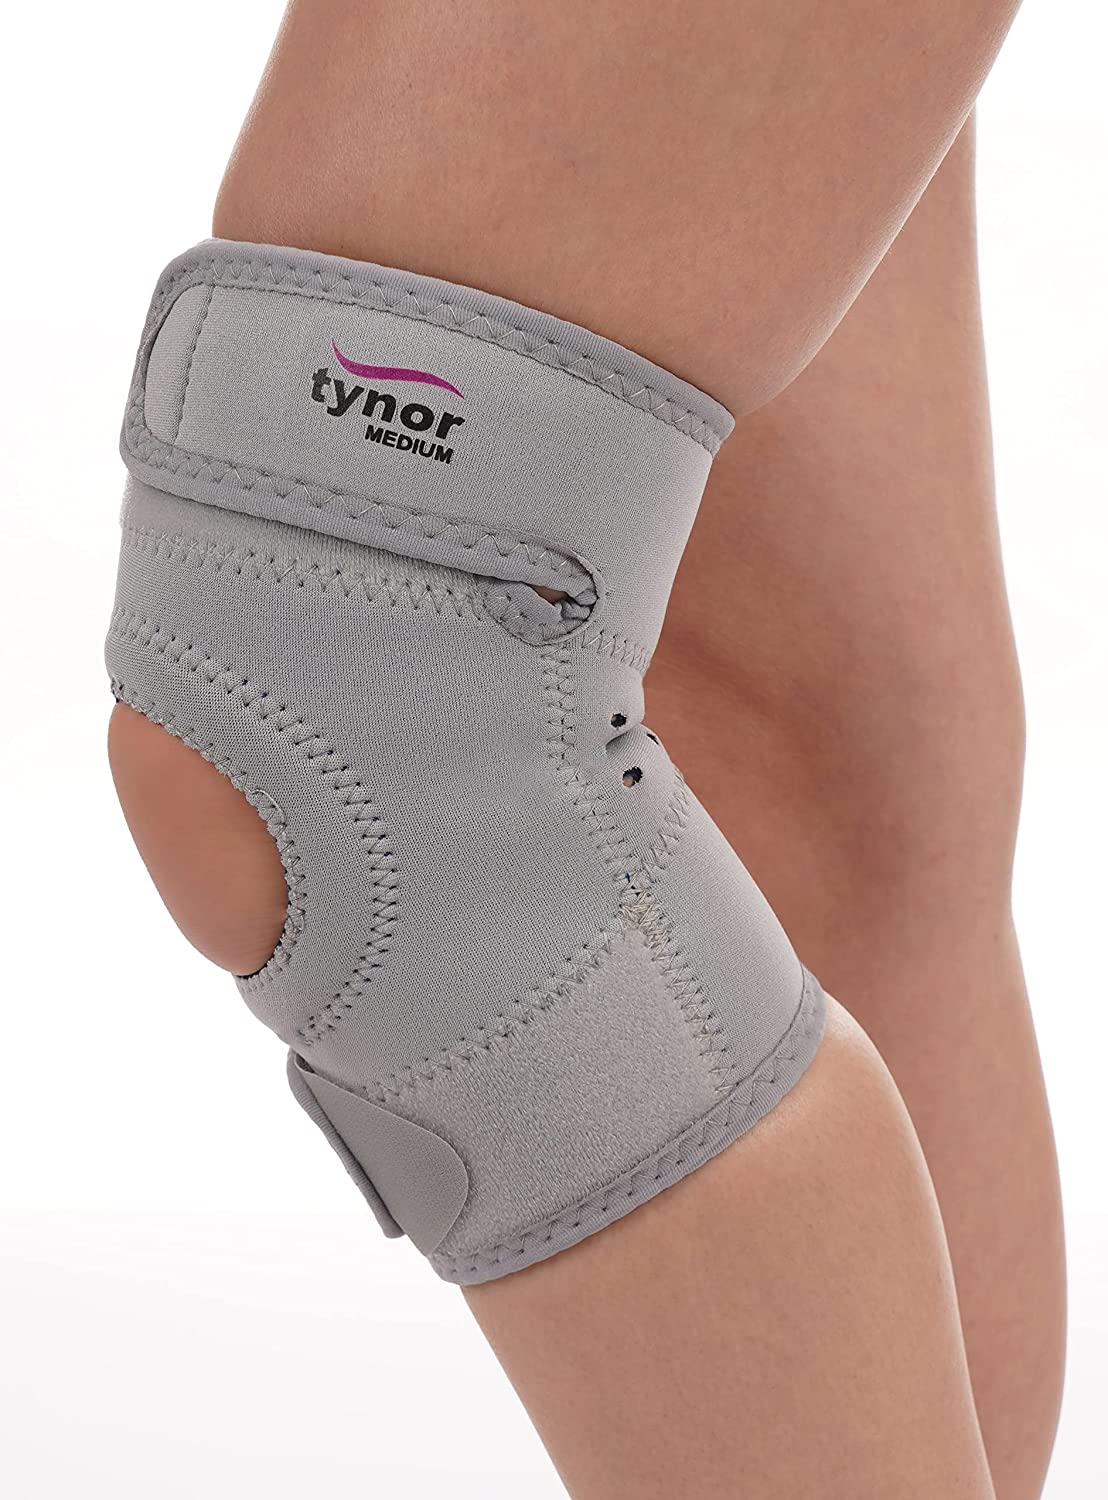 TYNOR Knee Support Sportif (Neo),XXL, 1 Unit Knee Support